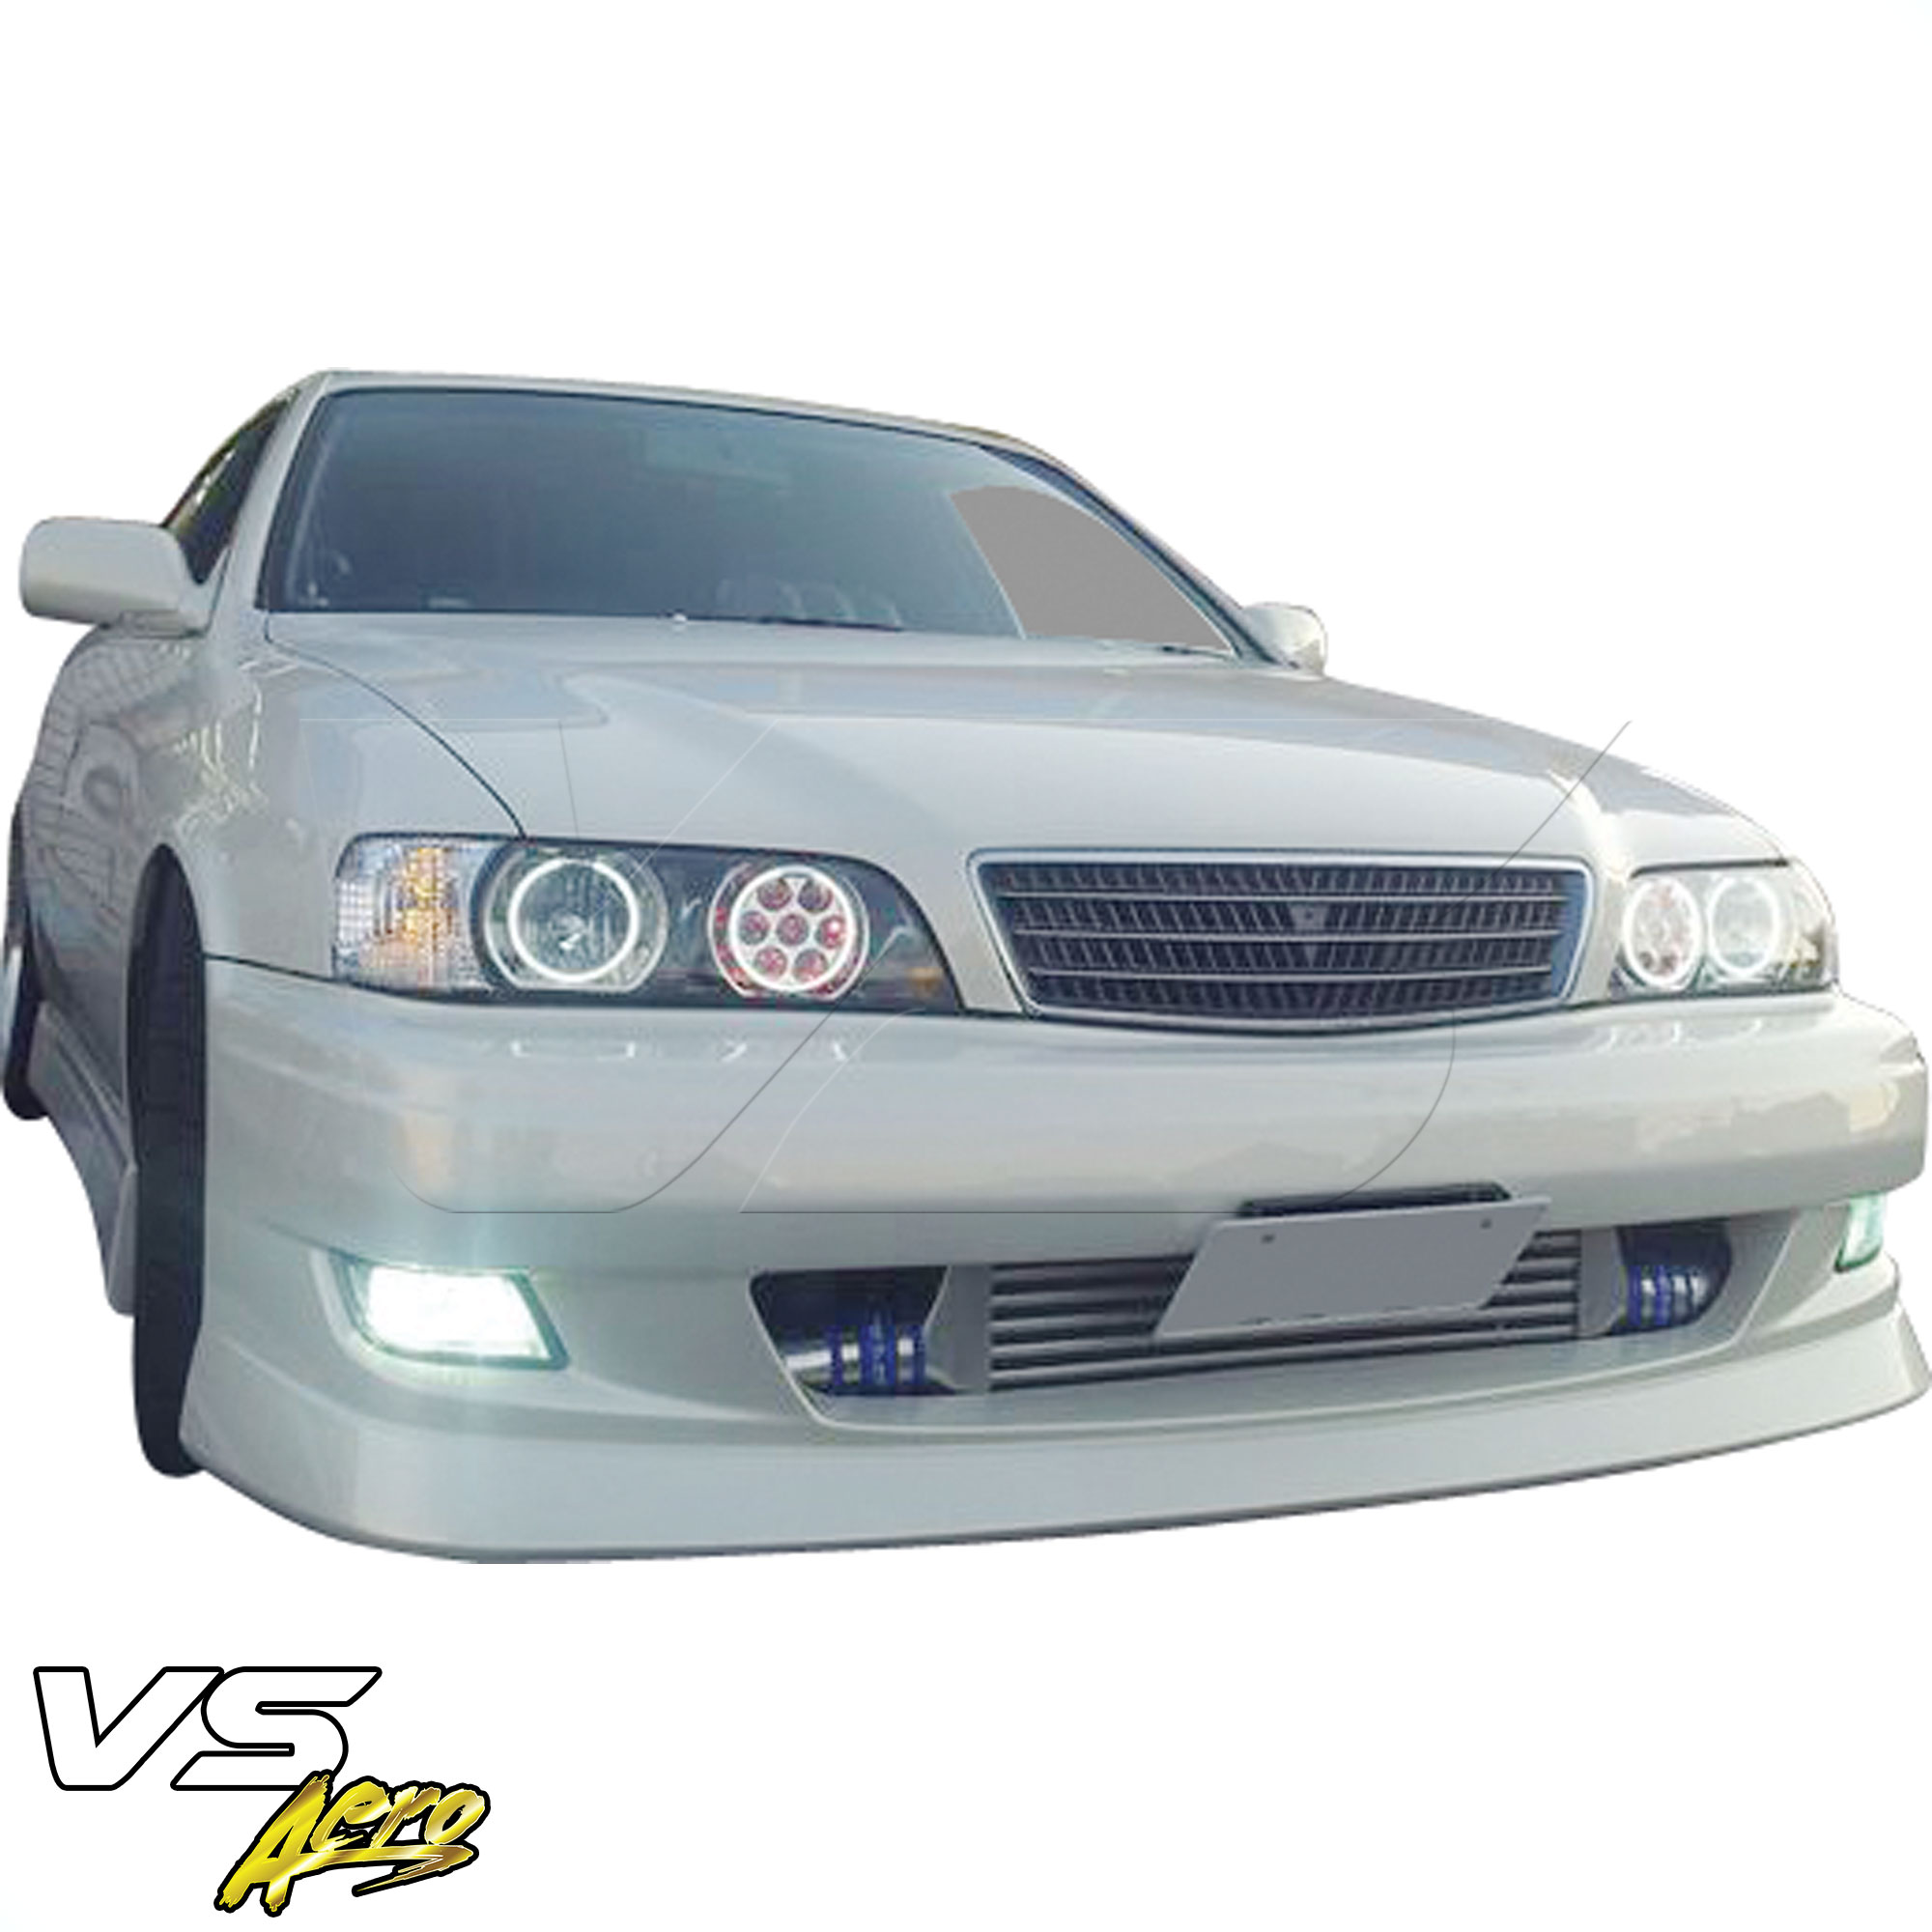 VSaero FRP URA vL Front Bumper > Toyota Chaser JZX100 1996-2000 - Image 12